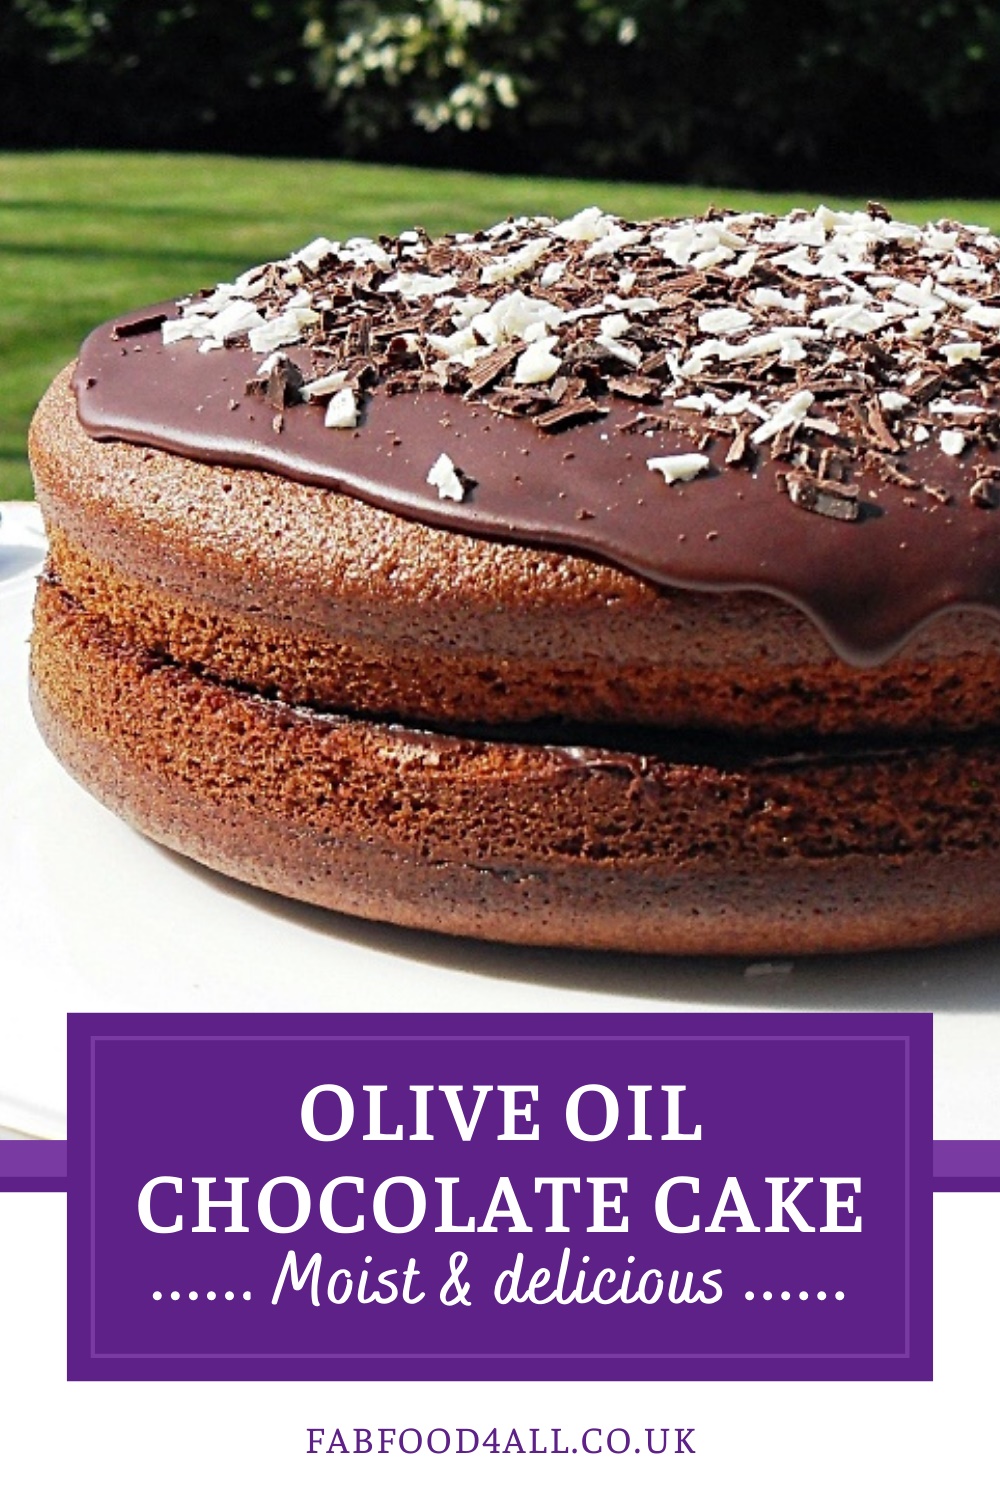 Olive Oil Chocolate Cake Pinterest image